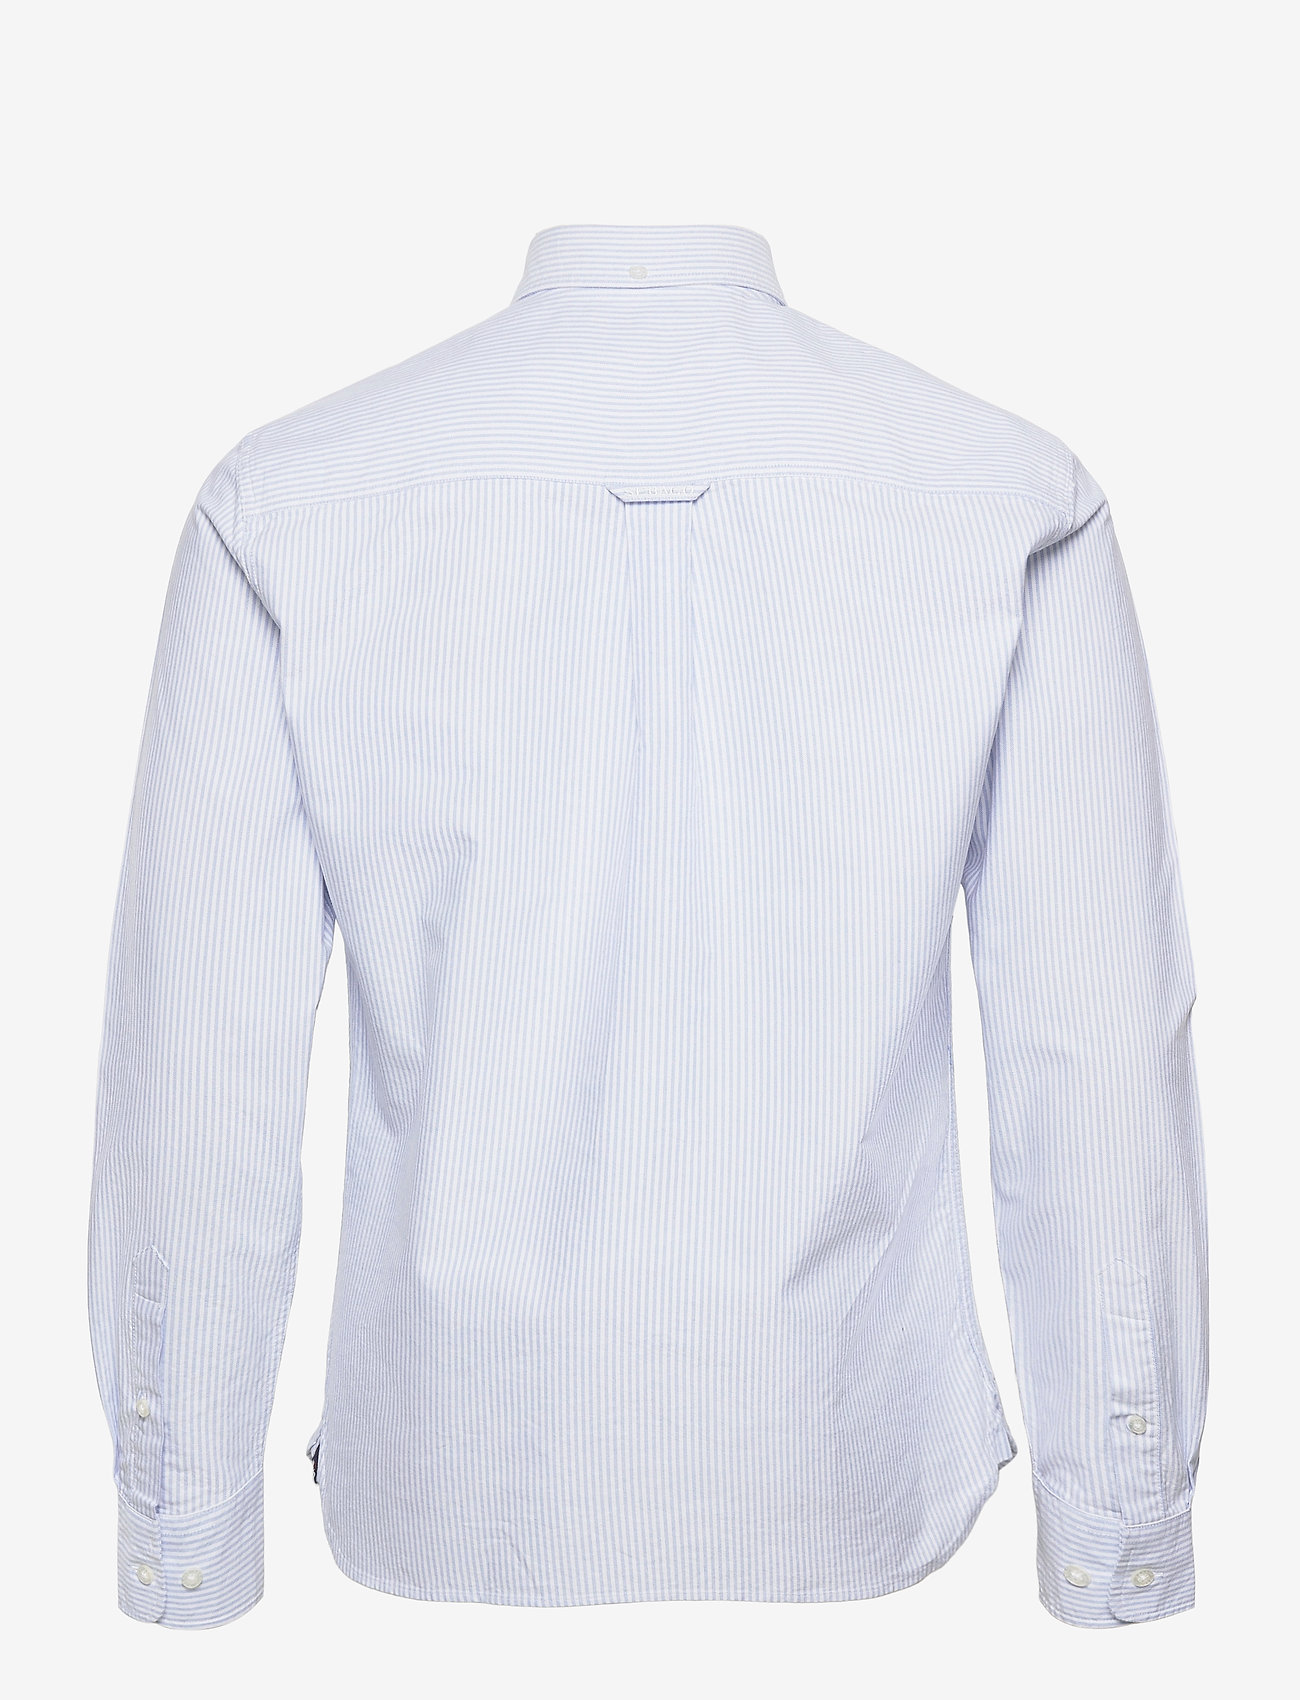 Sebago - Oxford Stripe Shirt B.D. - light blue/white - 1